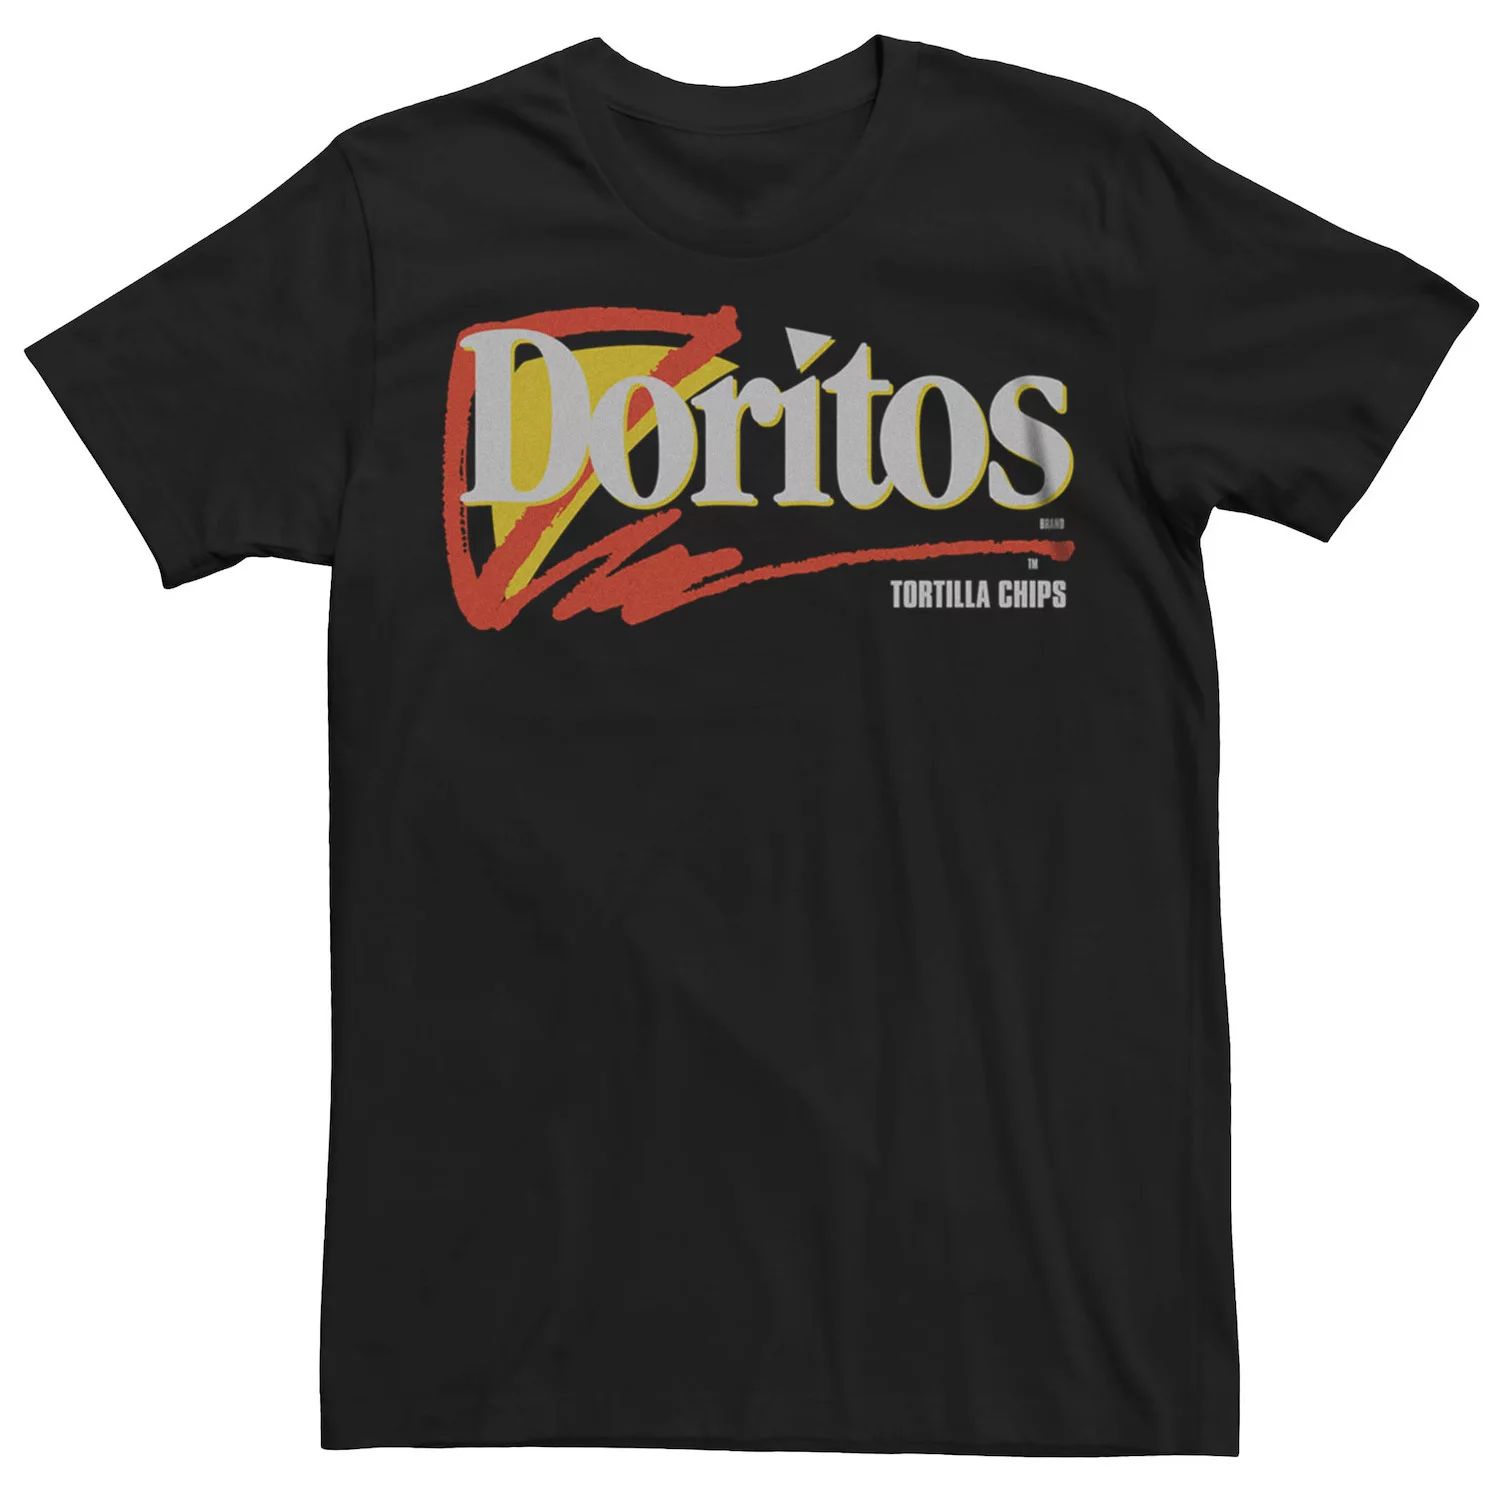 Мужская футболка с логотипом Doritos Tortilla Chips Licensed Character mister freed tortilla chips avocado 135g